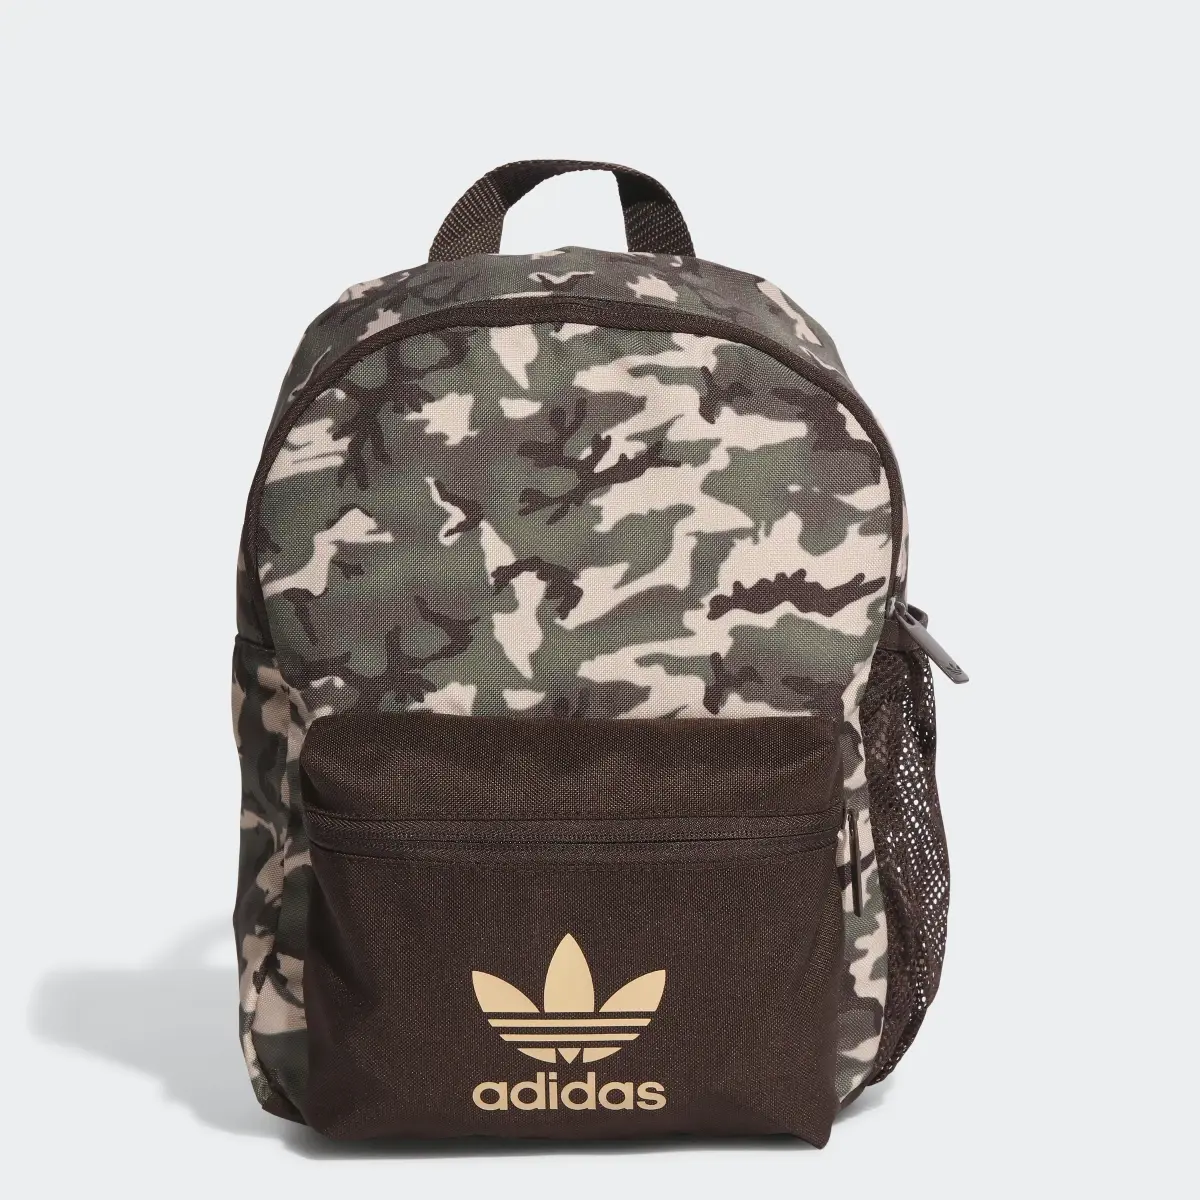 Adidas Camo Backpack. 1